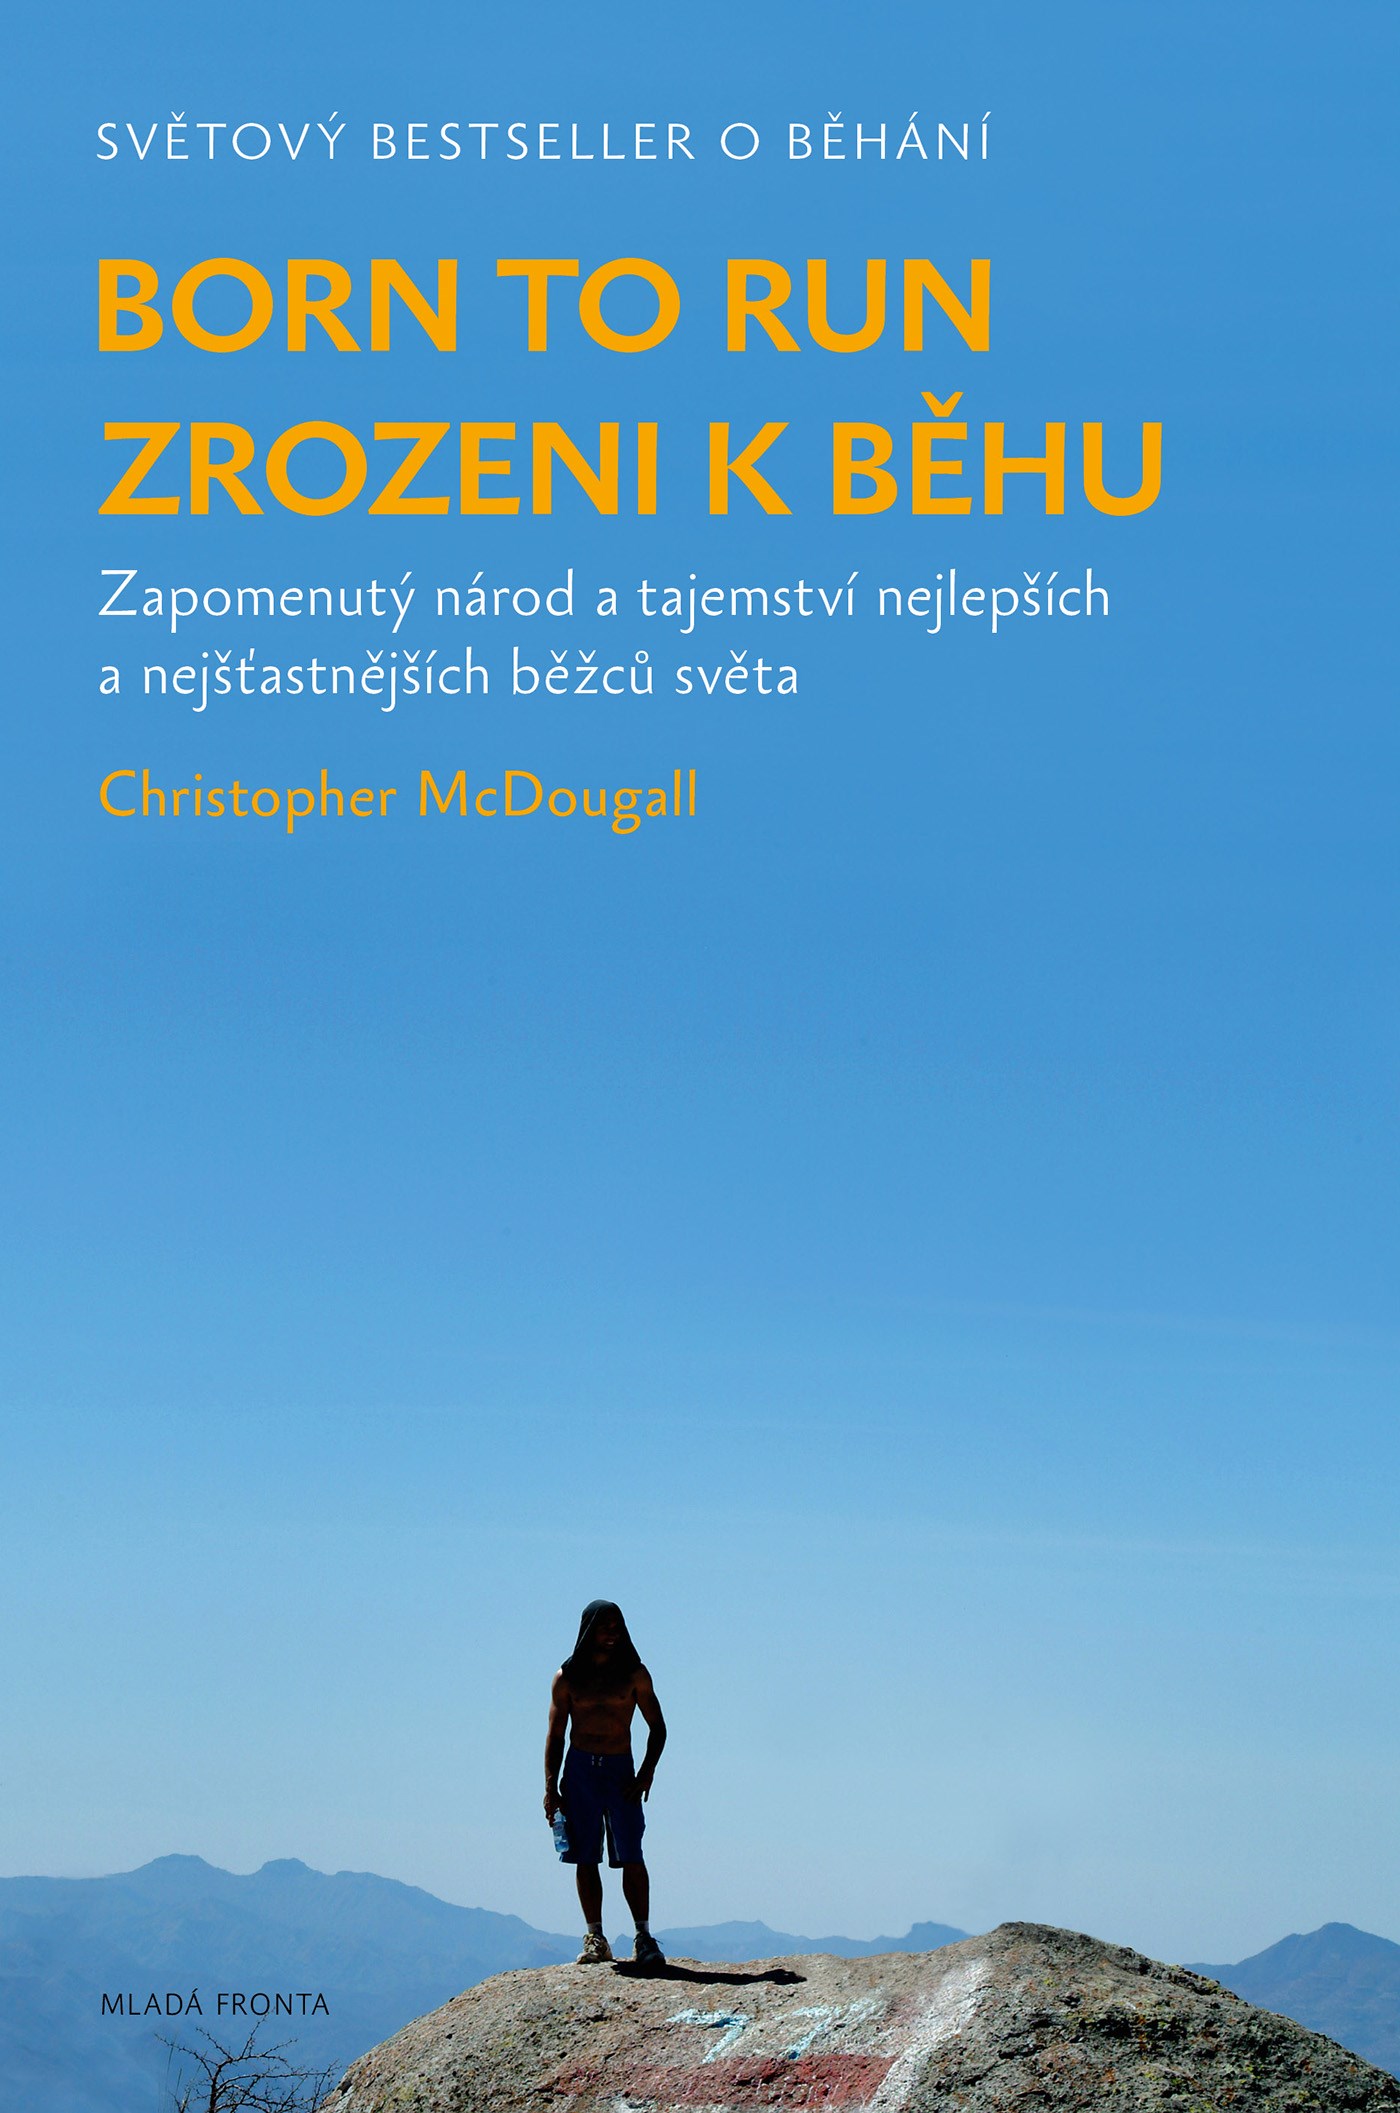 Zrozeni k běhu - Born to run - kniha - Christopher McDougall